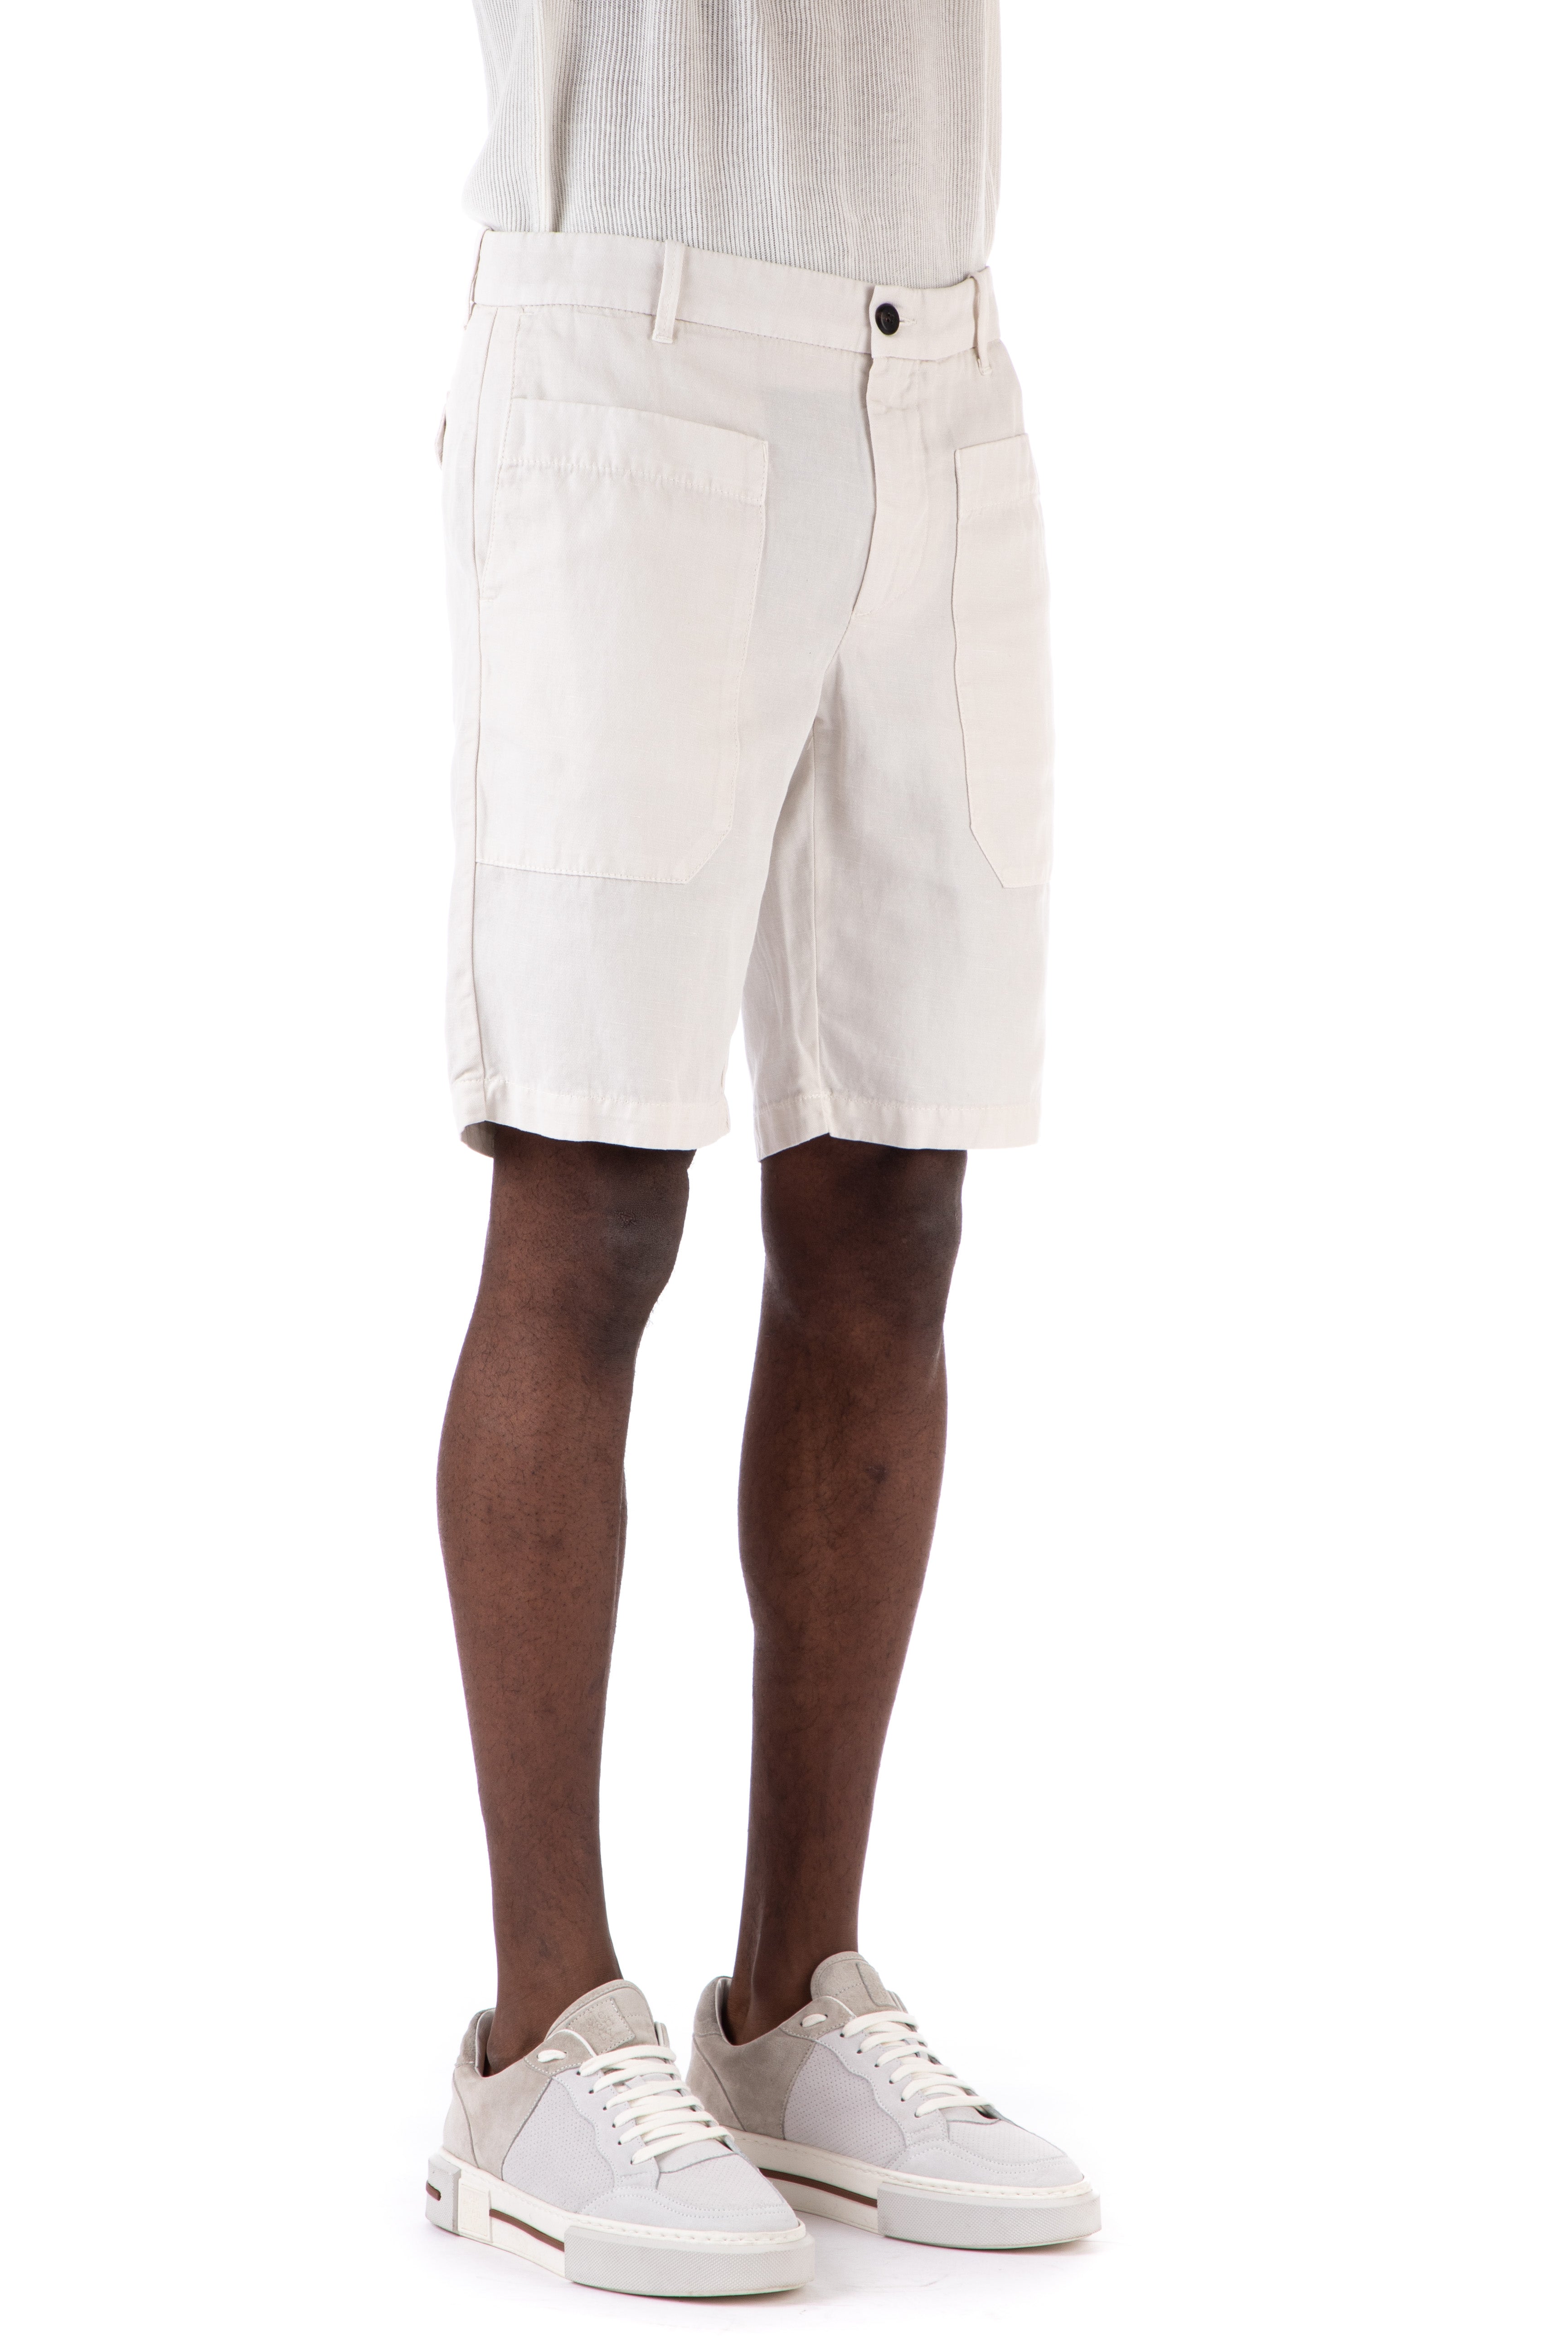 Bermuda shorts in cotton-linen